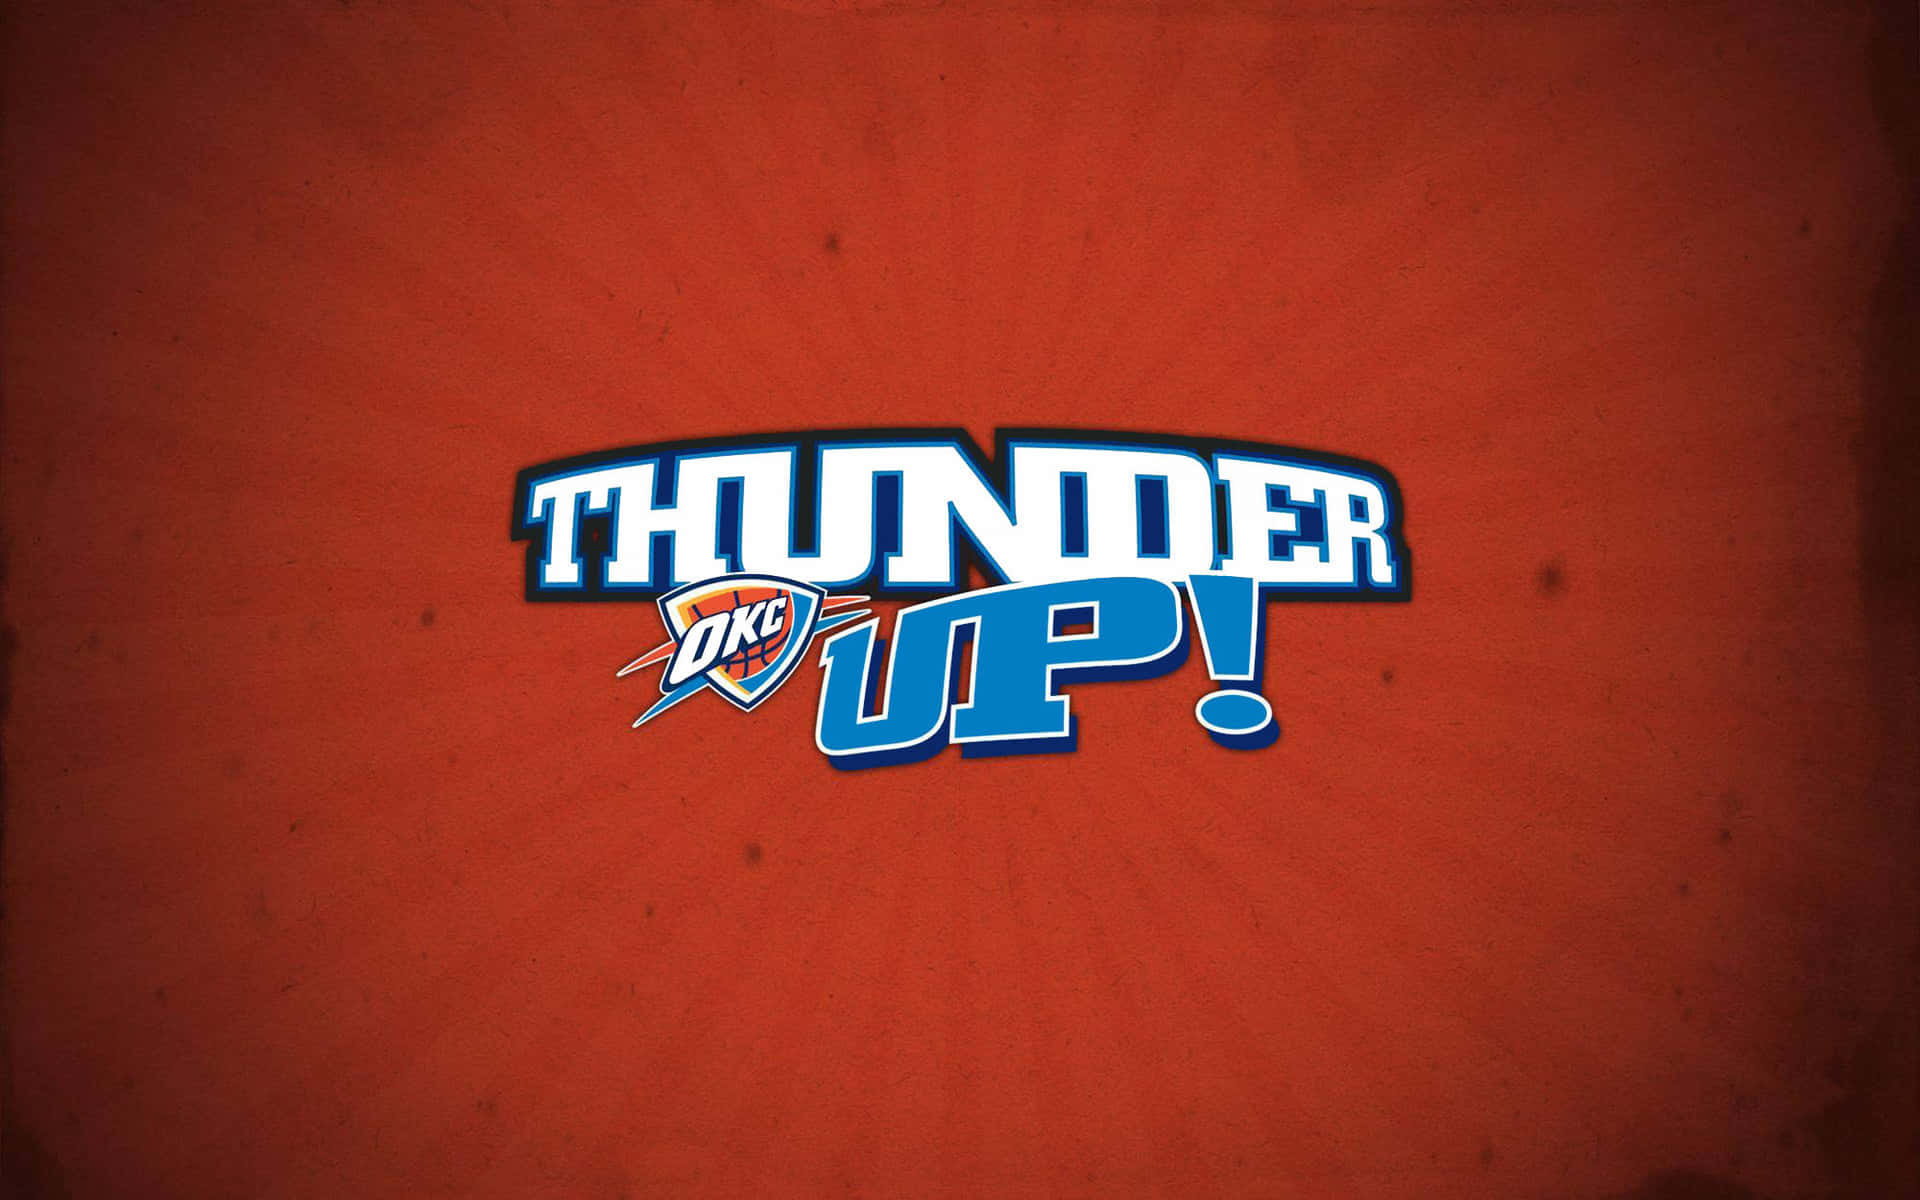 NBA League OKC Oklahoma City Thunders Slogan Wallpaper